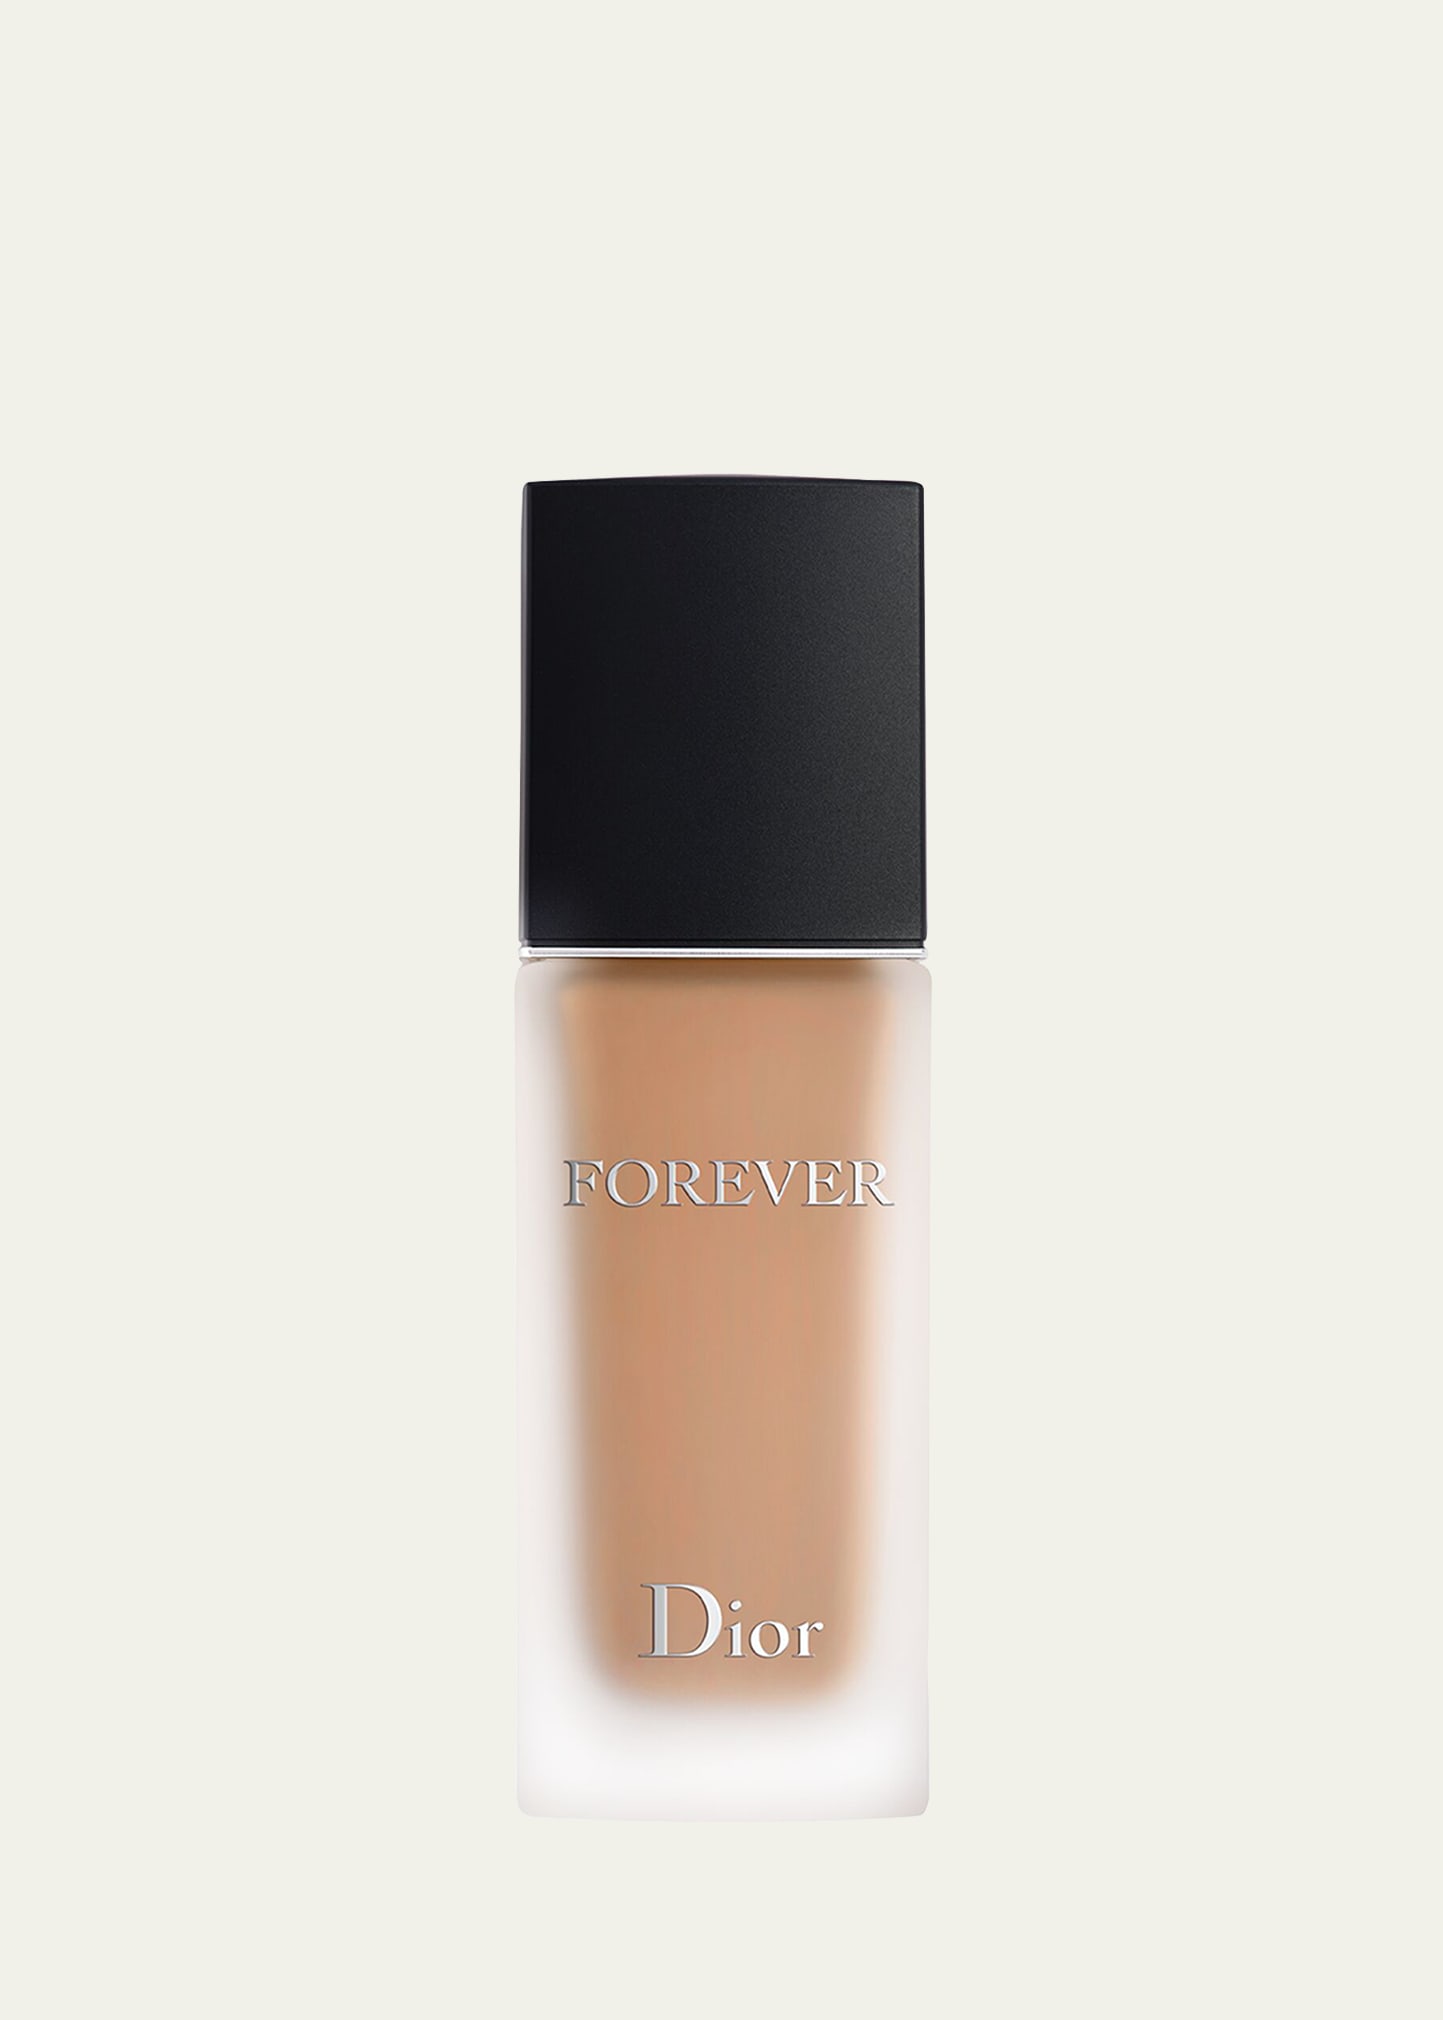 Dior 1 Oz. Forever Matte Skincare Foundation Spf 15 In 4.5 Neutral